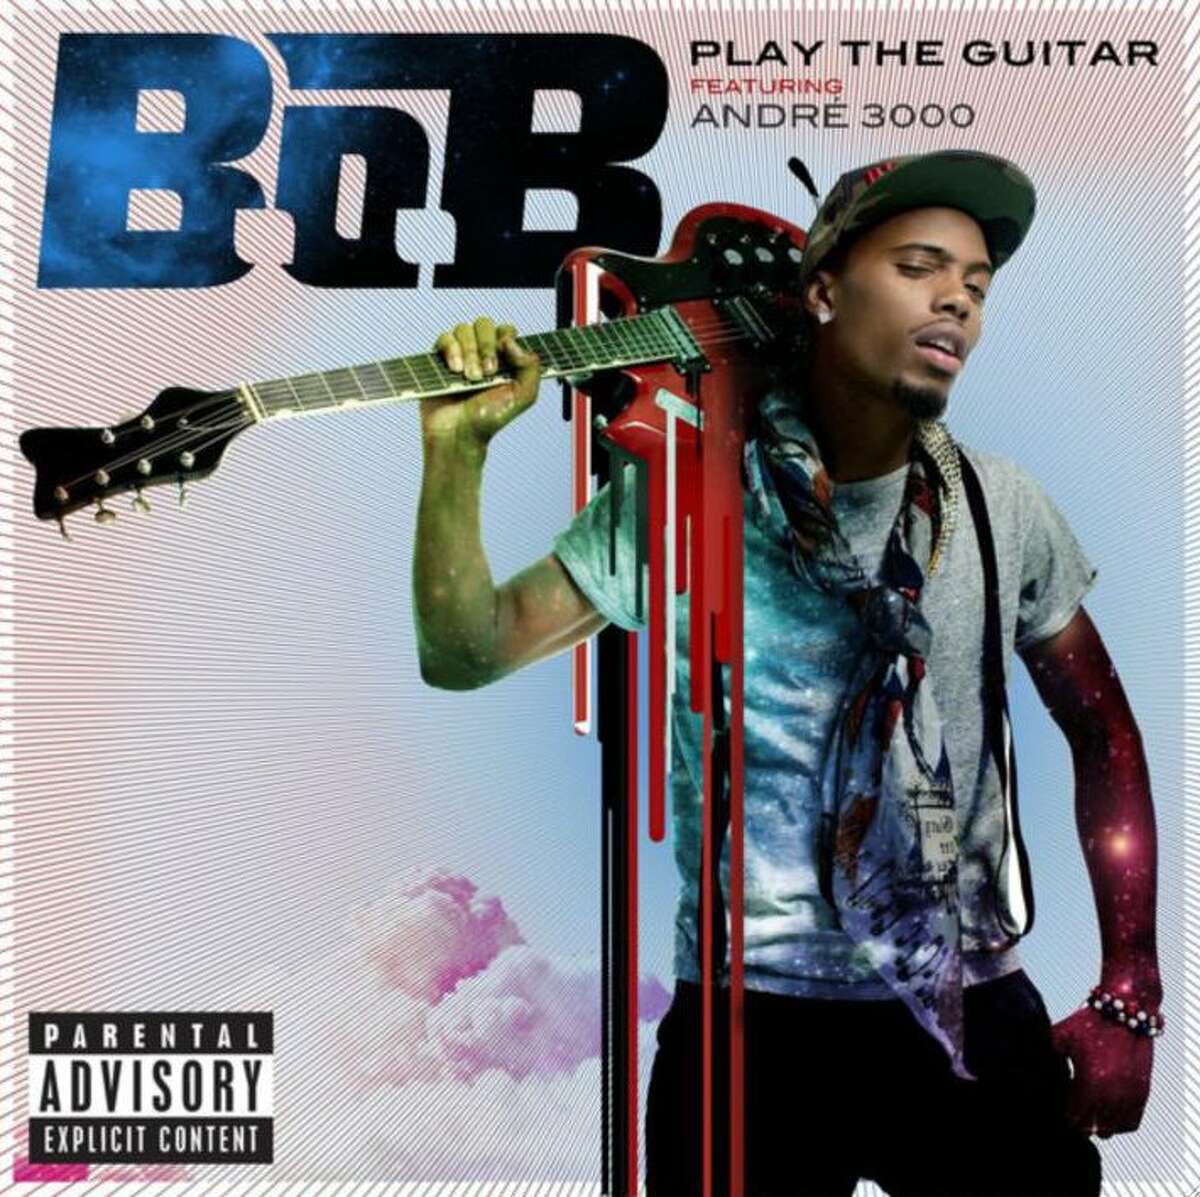 "Play the Guitar" by B.O.B.